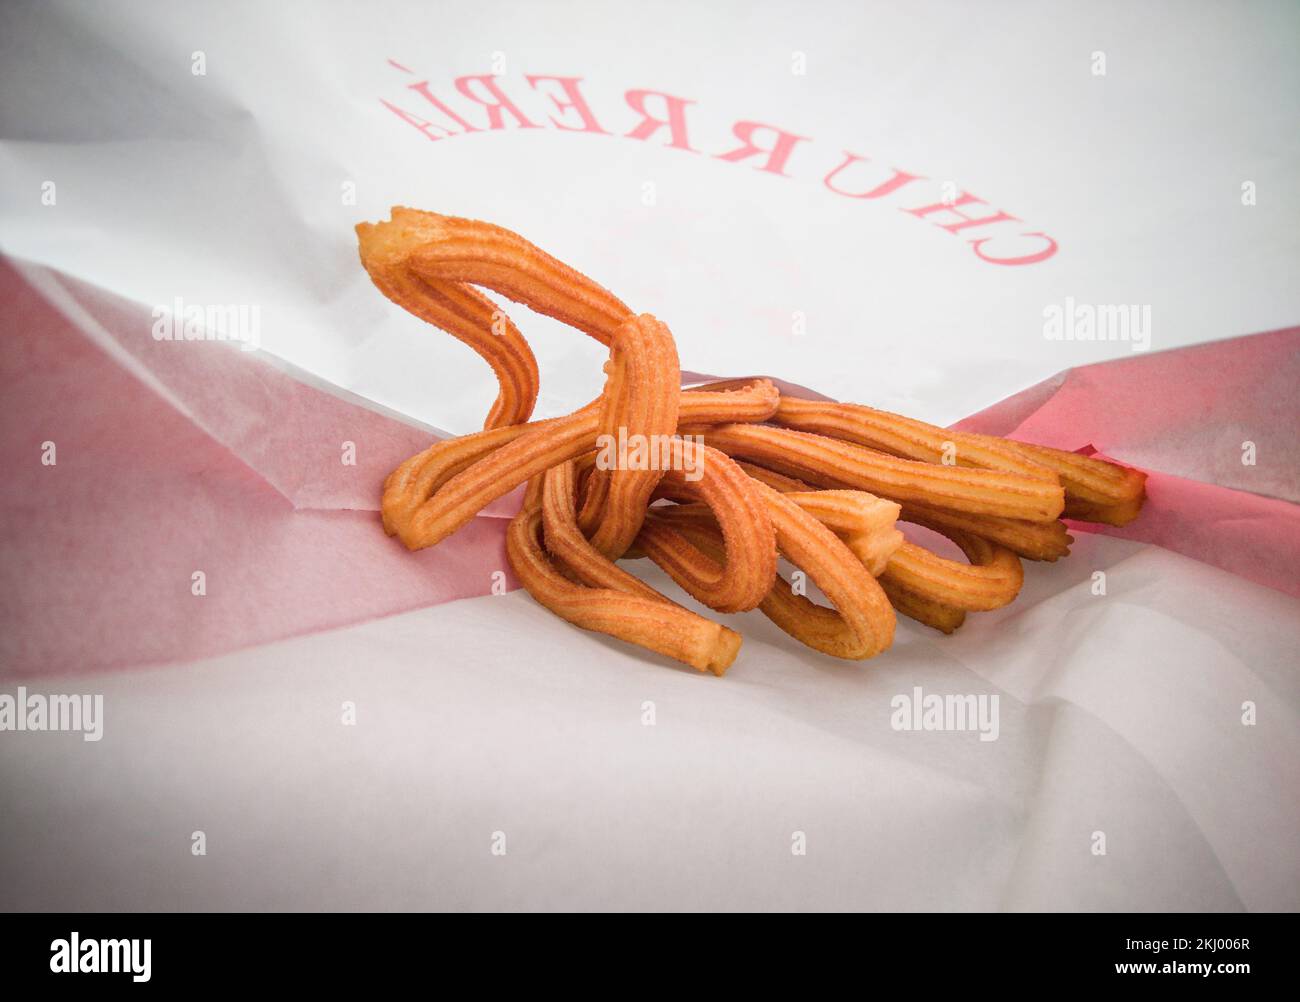 Artisan ring churros in bag. Photo taken from inside the paper bag Stock Photo